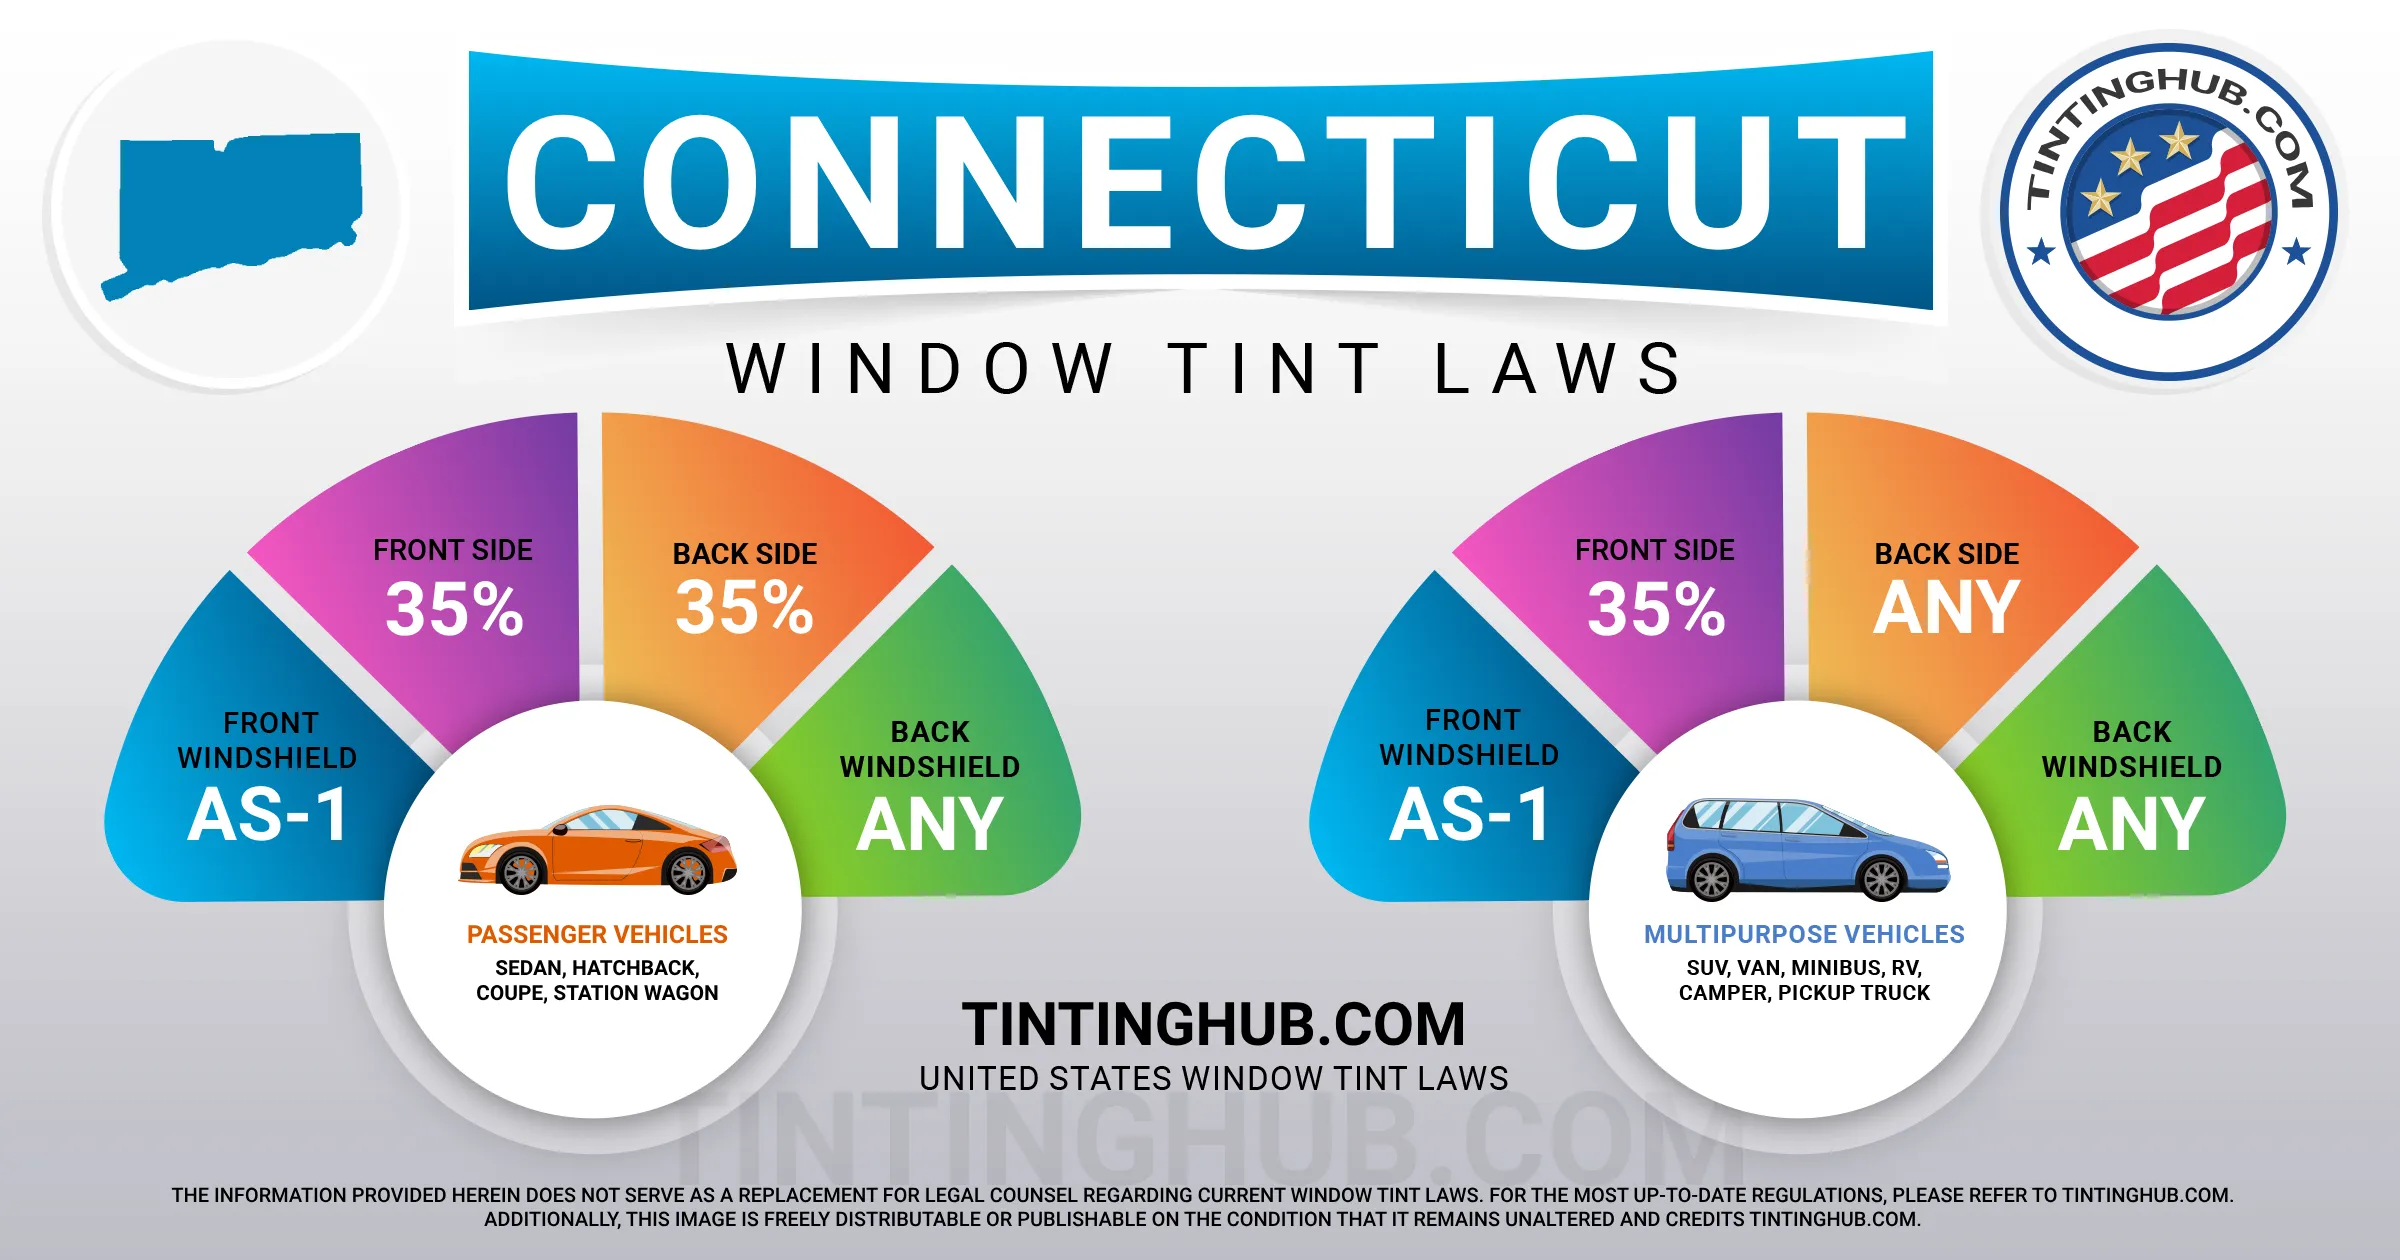 Connecticut Automobile Window Tint Laws